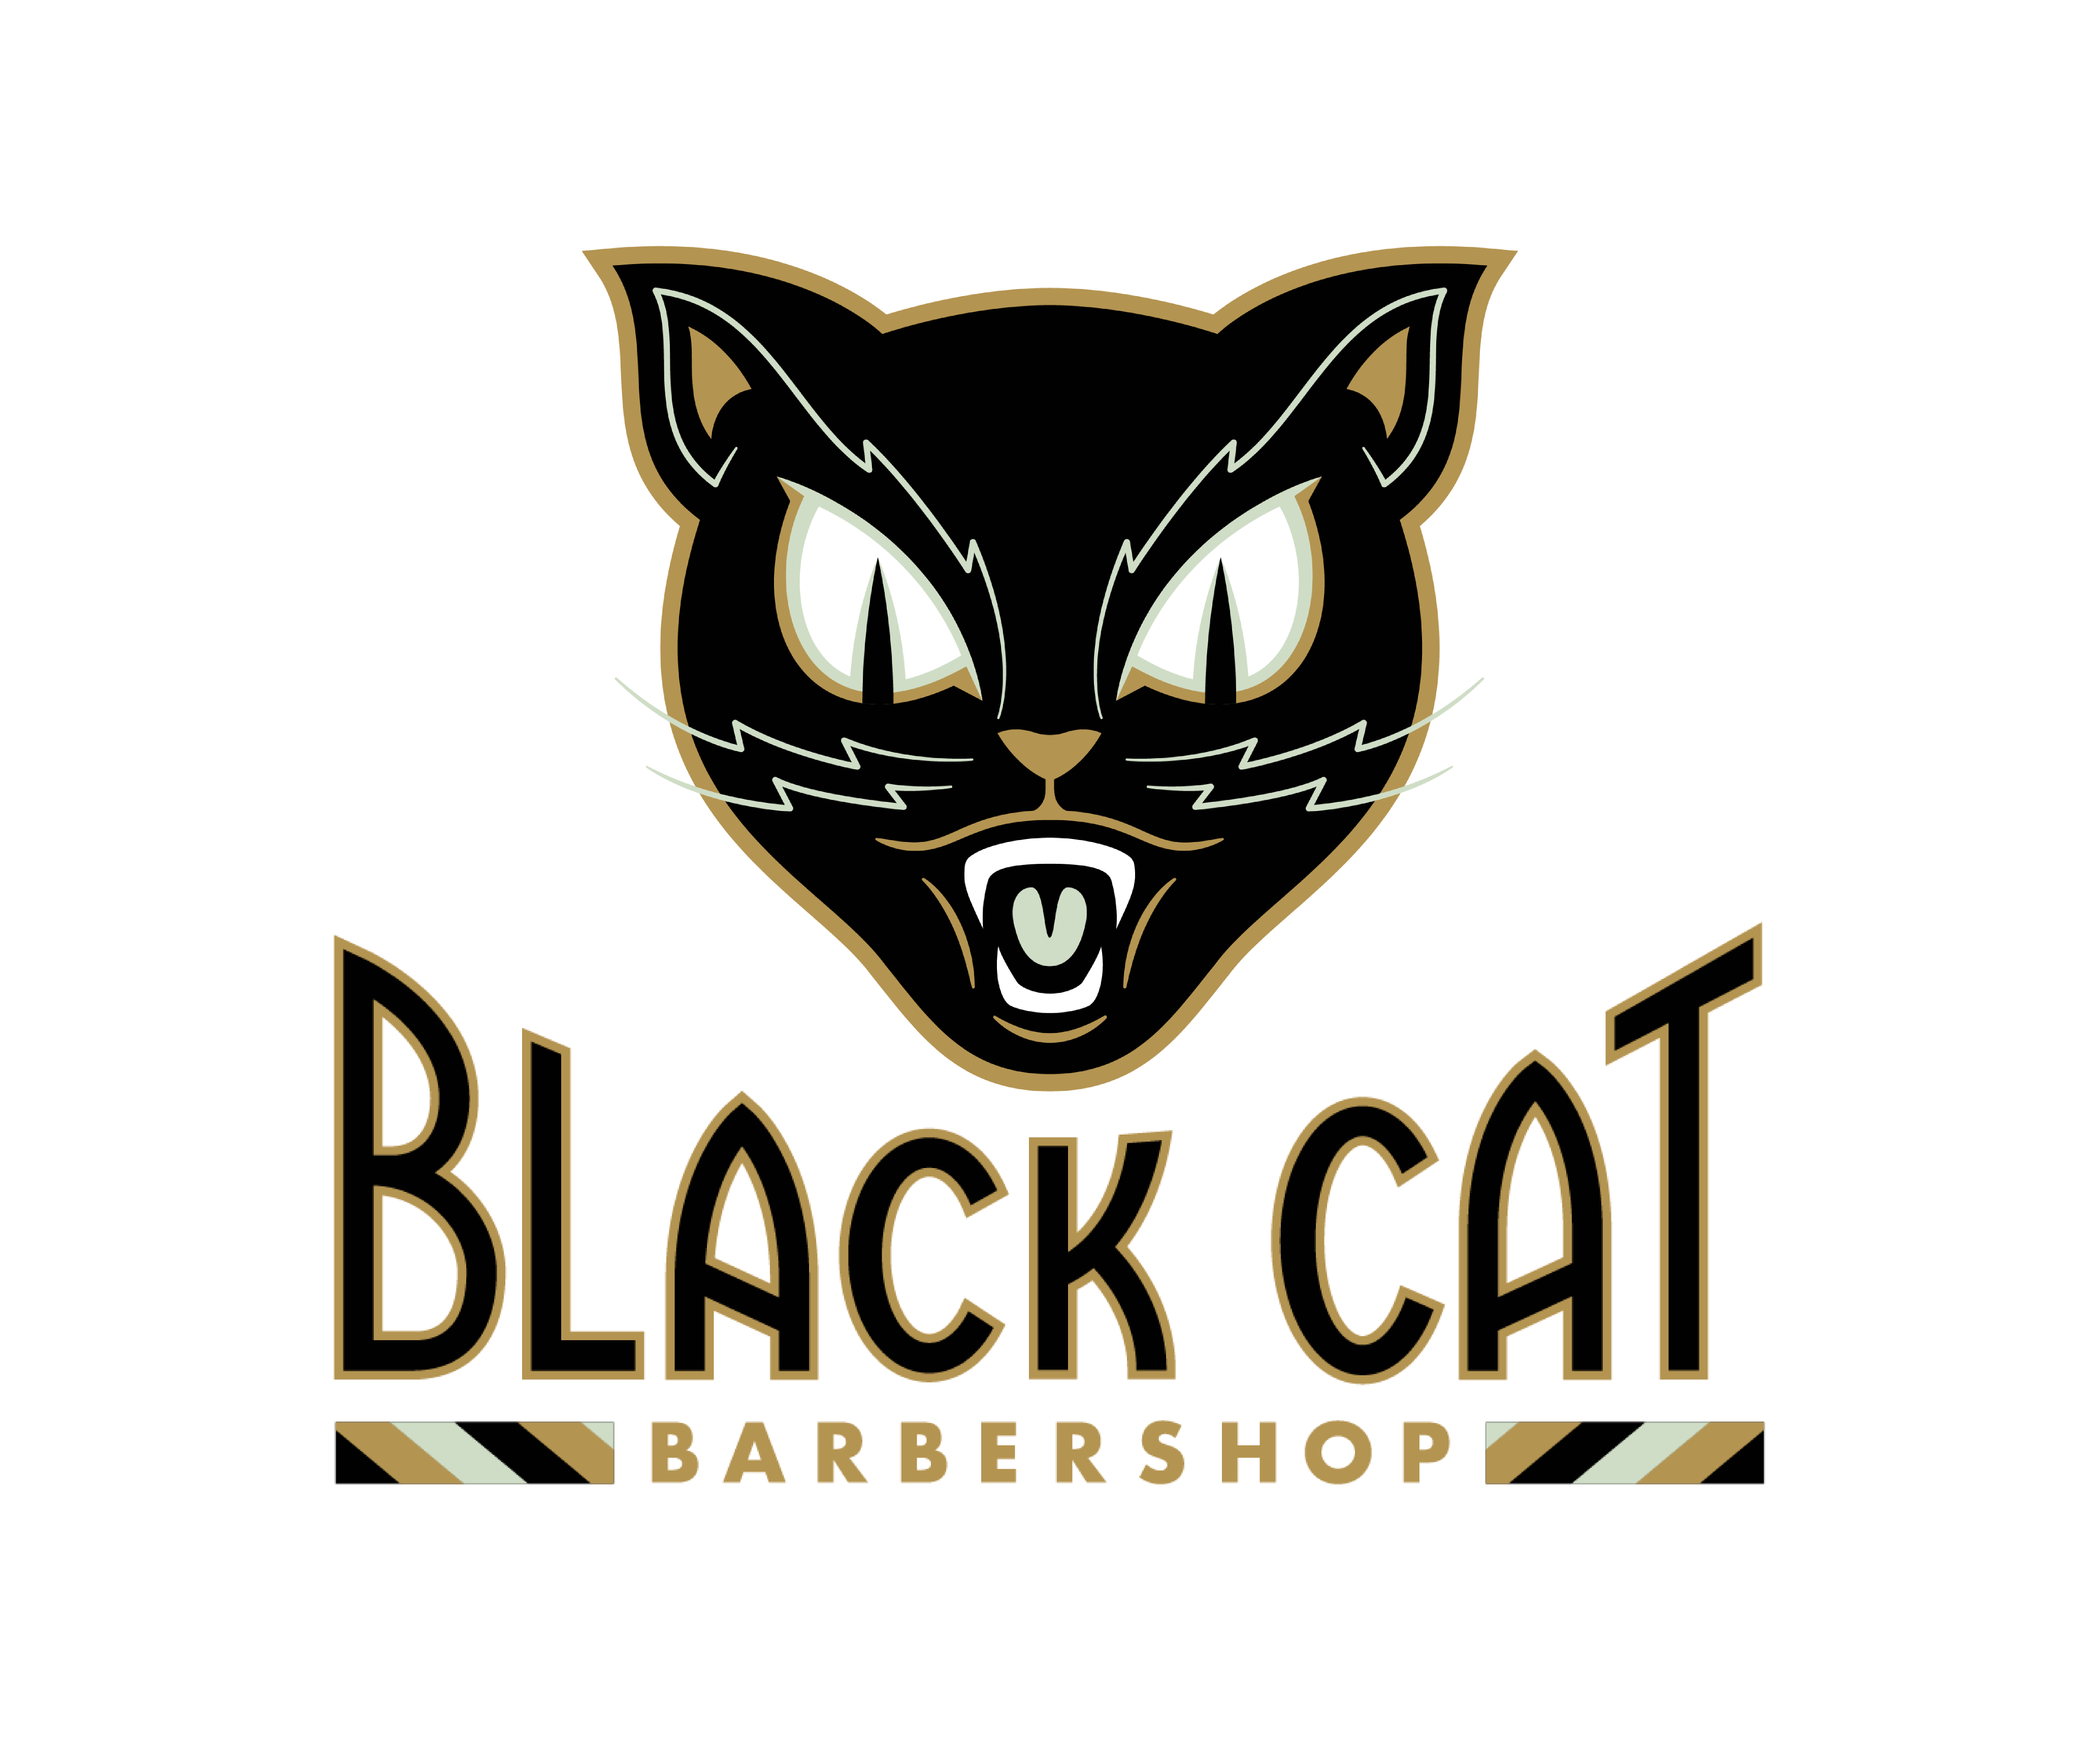 Black Cat Barbershop Logo with Type